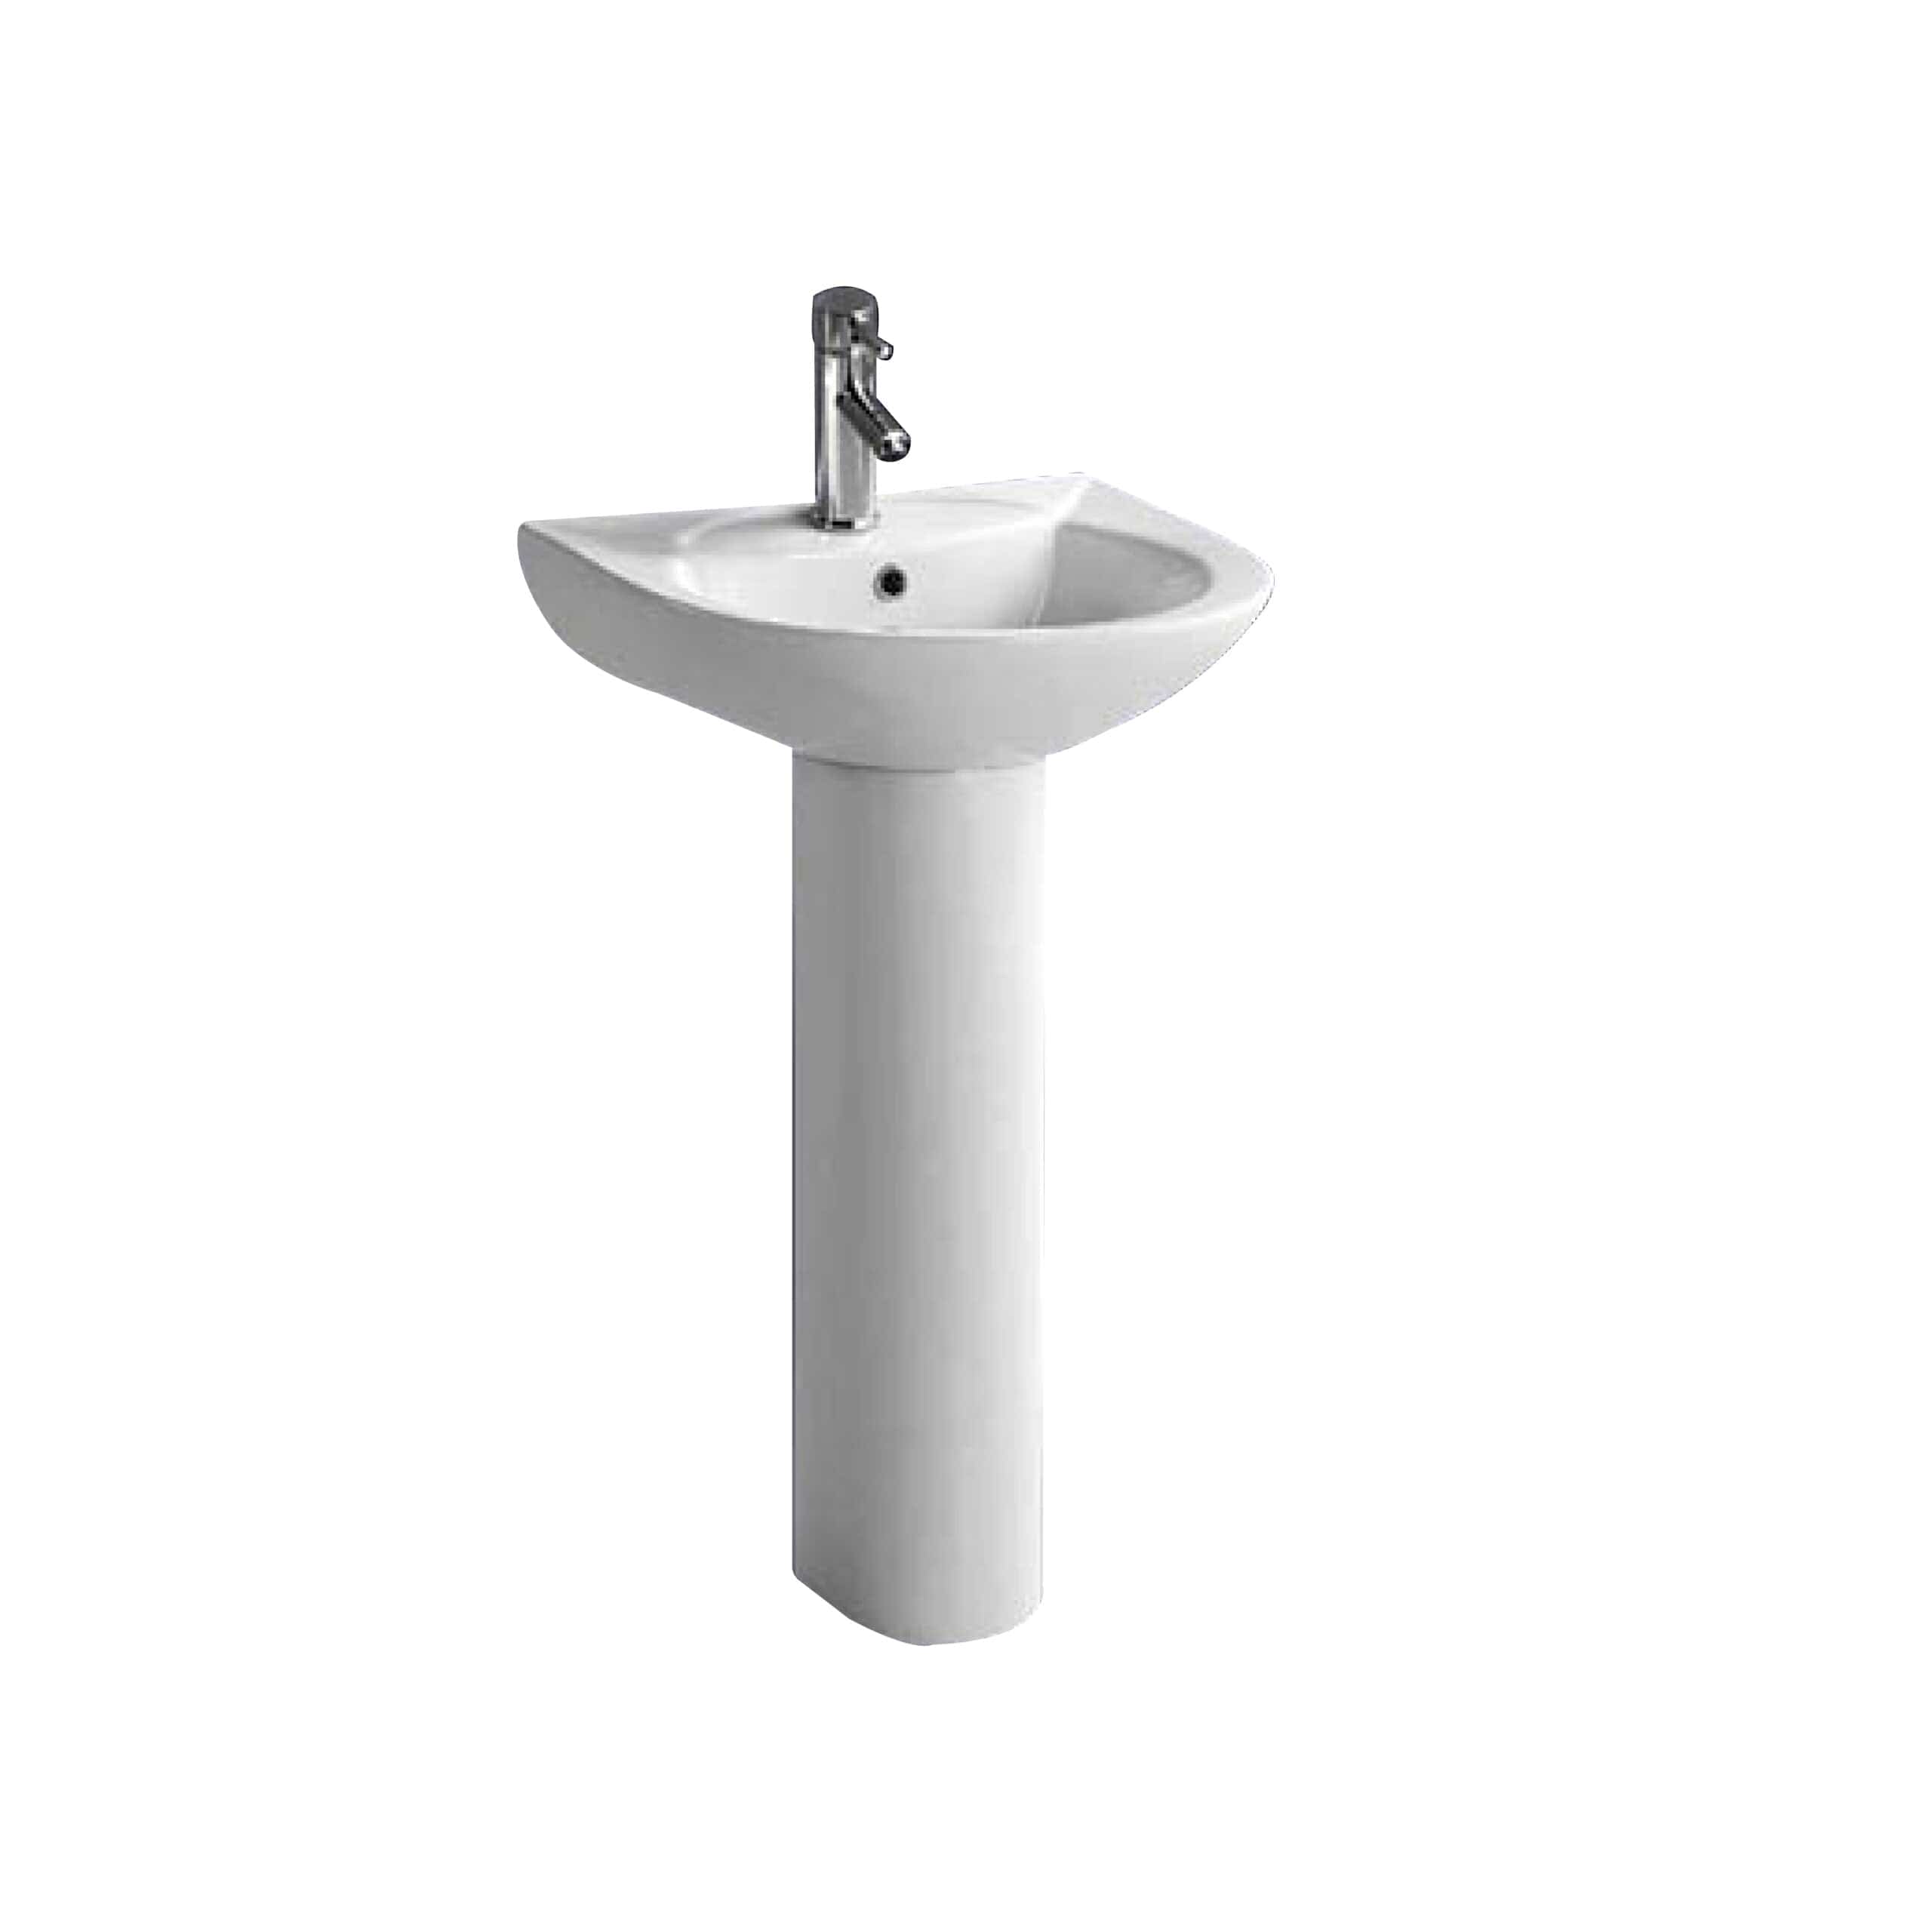 Full Pedestal Hand Wash Basin 520 x 445 x 800mm - B212 | Supply Master | Accra, Ghana Bathroom Sink Buy Tools hardware Building materials